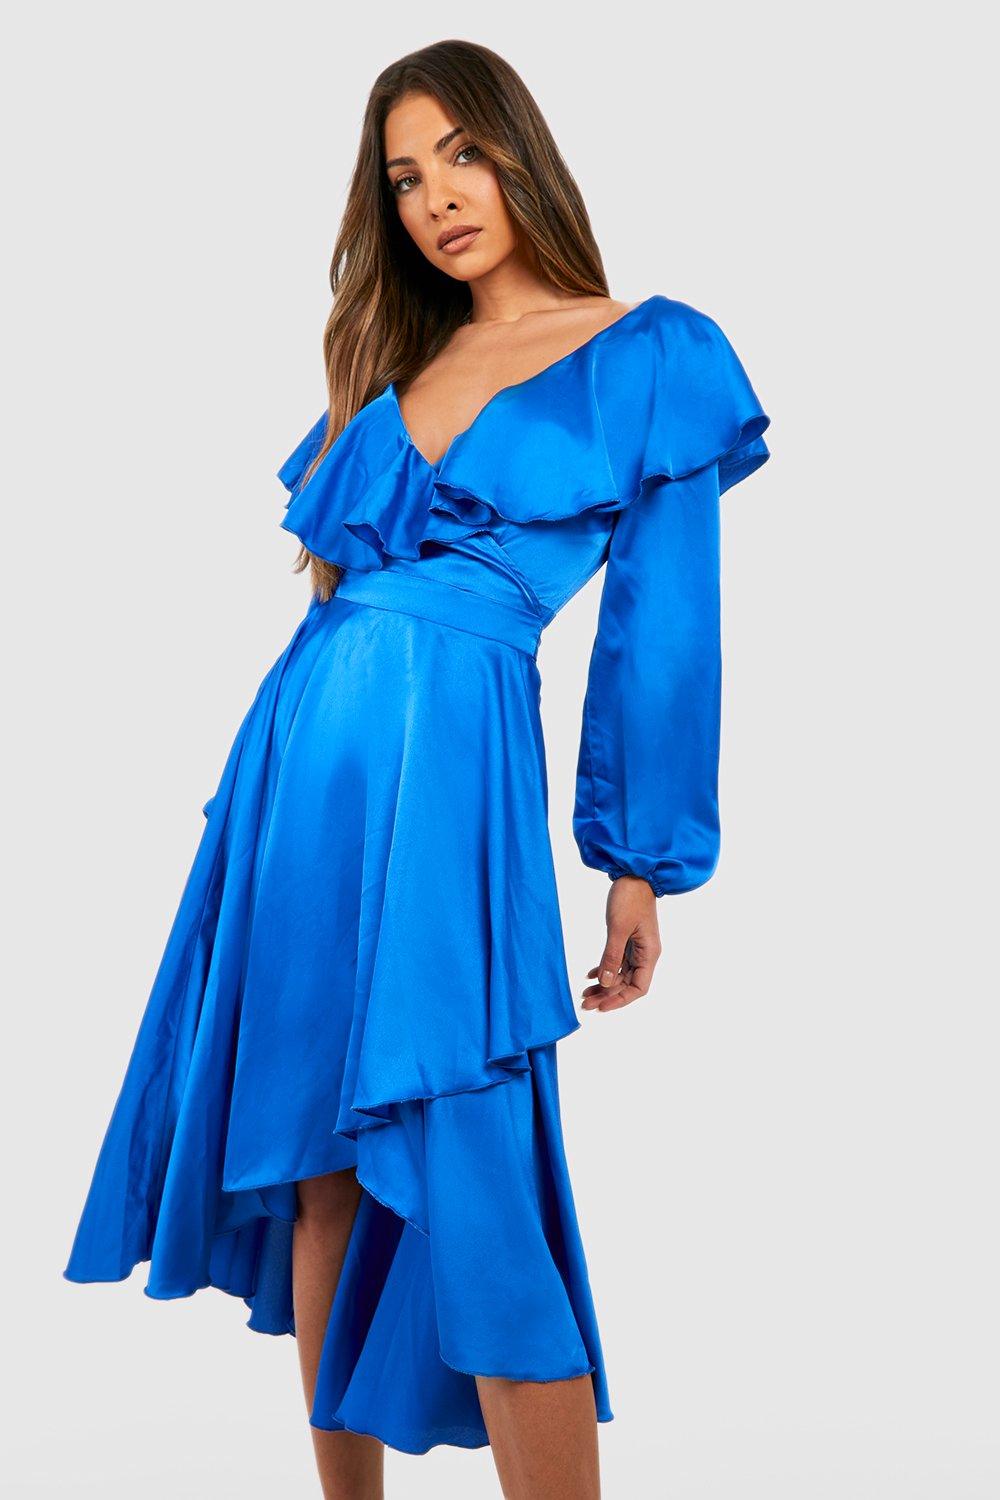 70s Dresses – Disco Dress, Hippie Dress, Caftan Dress Womens Long Sleeve Satin Ruffle Wrap Skater Dress - Blue - 10 $50.00 AT vintagedancer.com